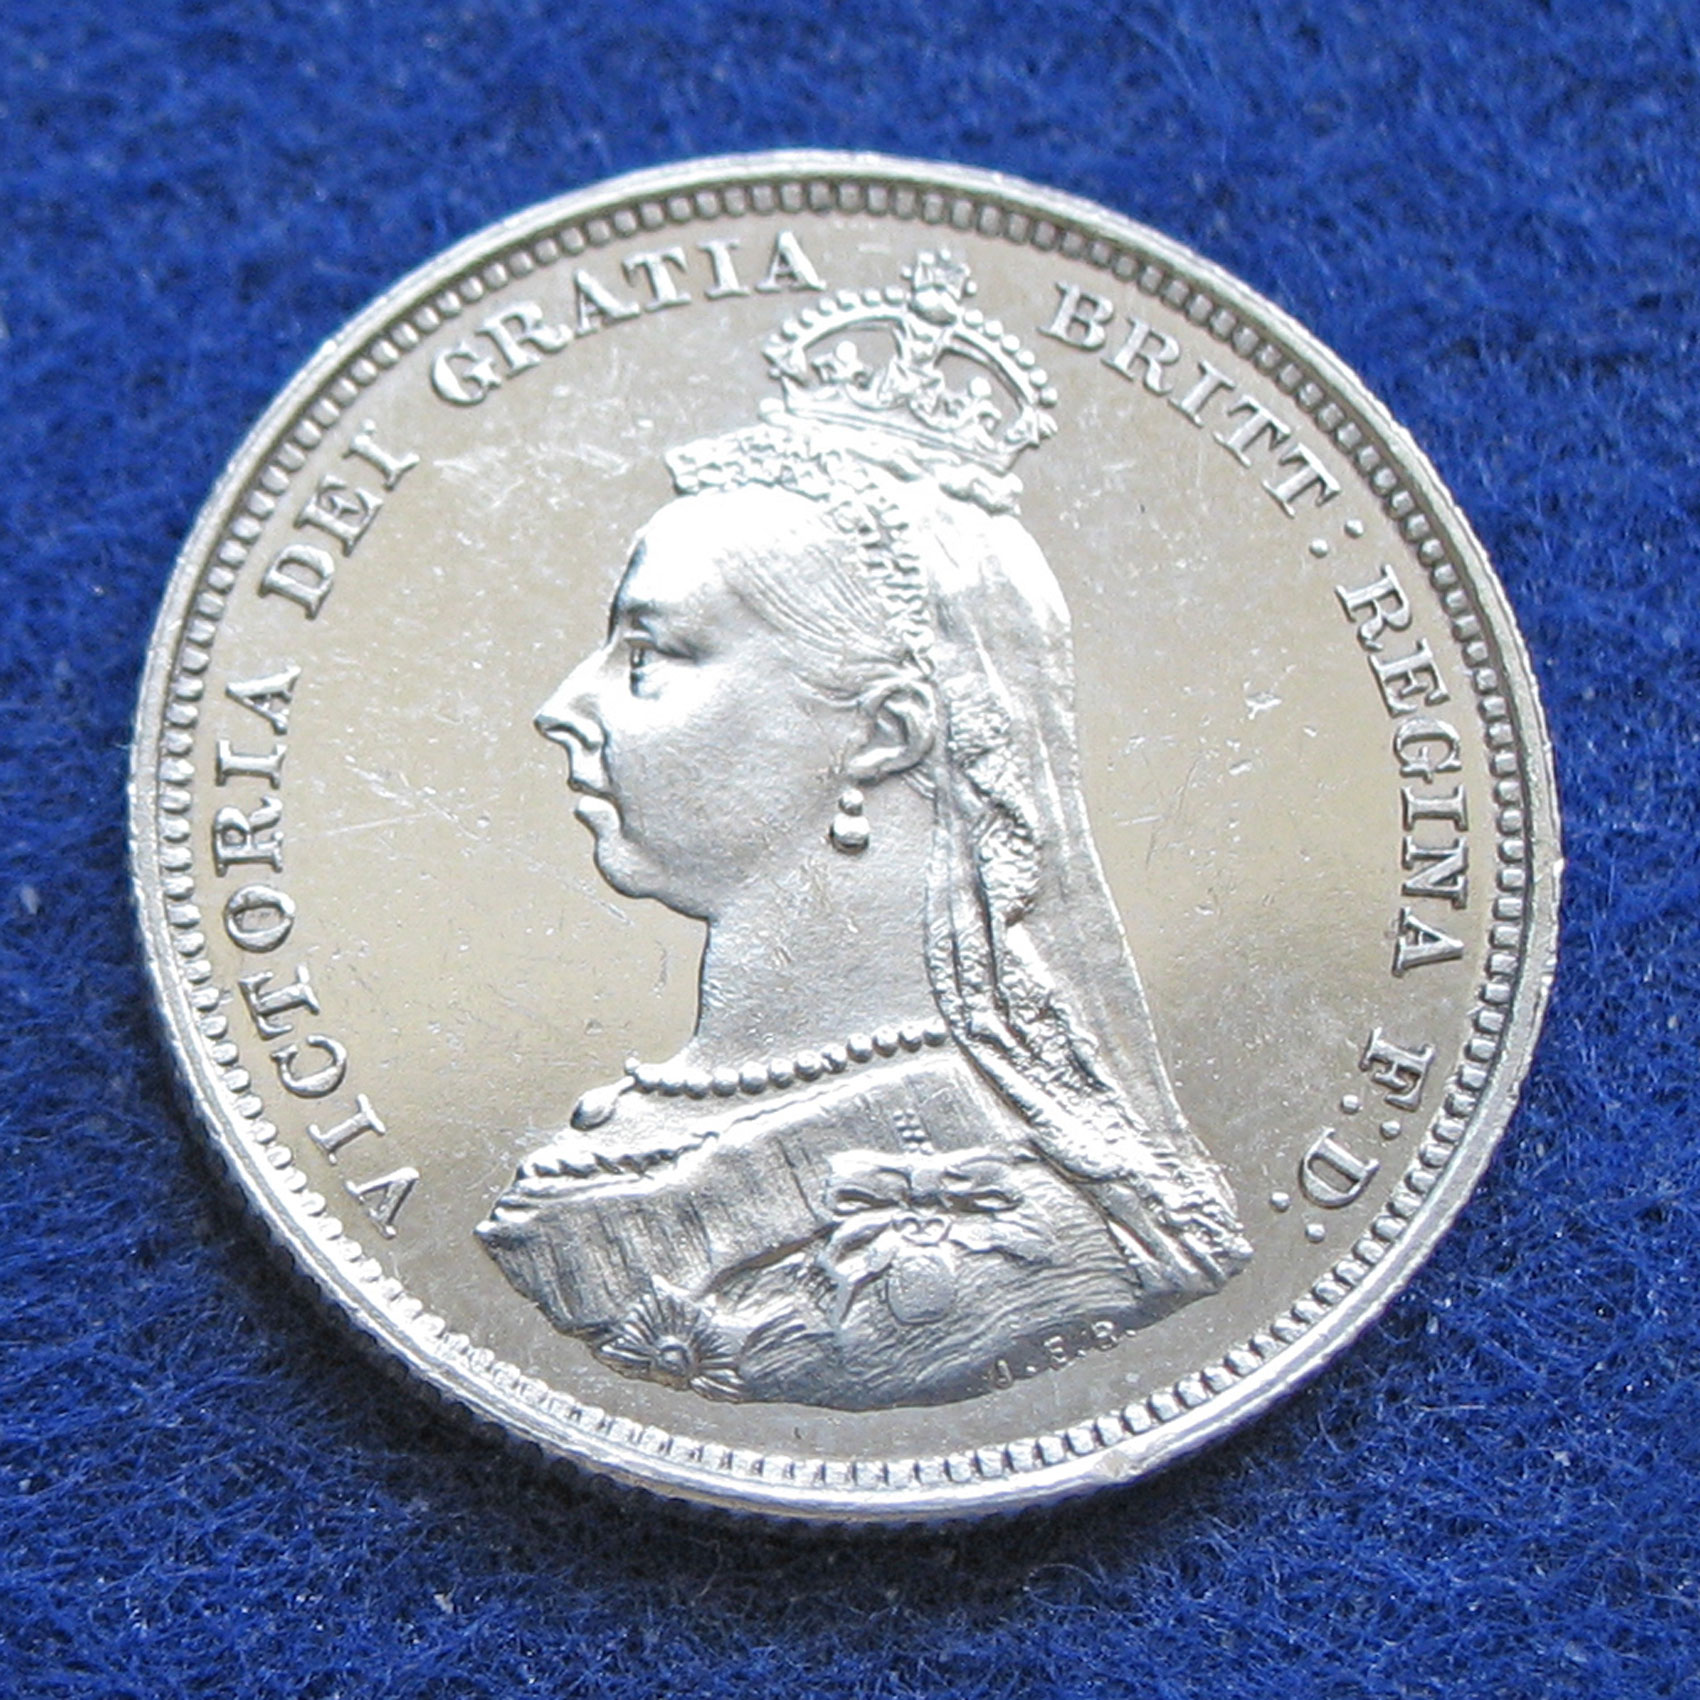 1887 Queen Victoria Jubilee Head Silver Shilling - Uncirculated | eBay